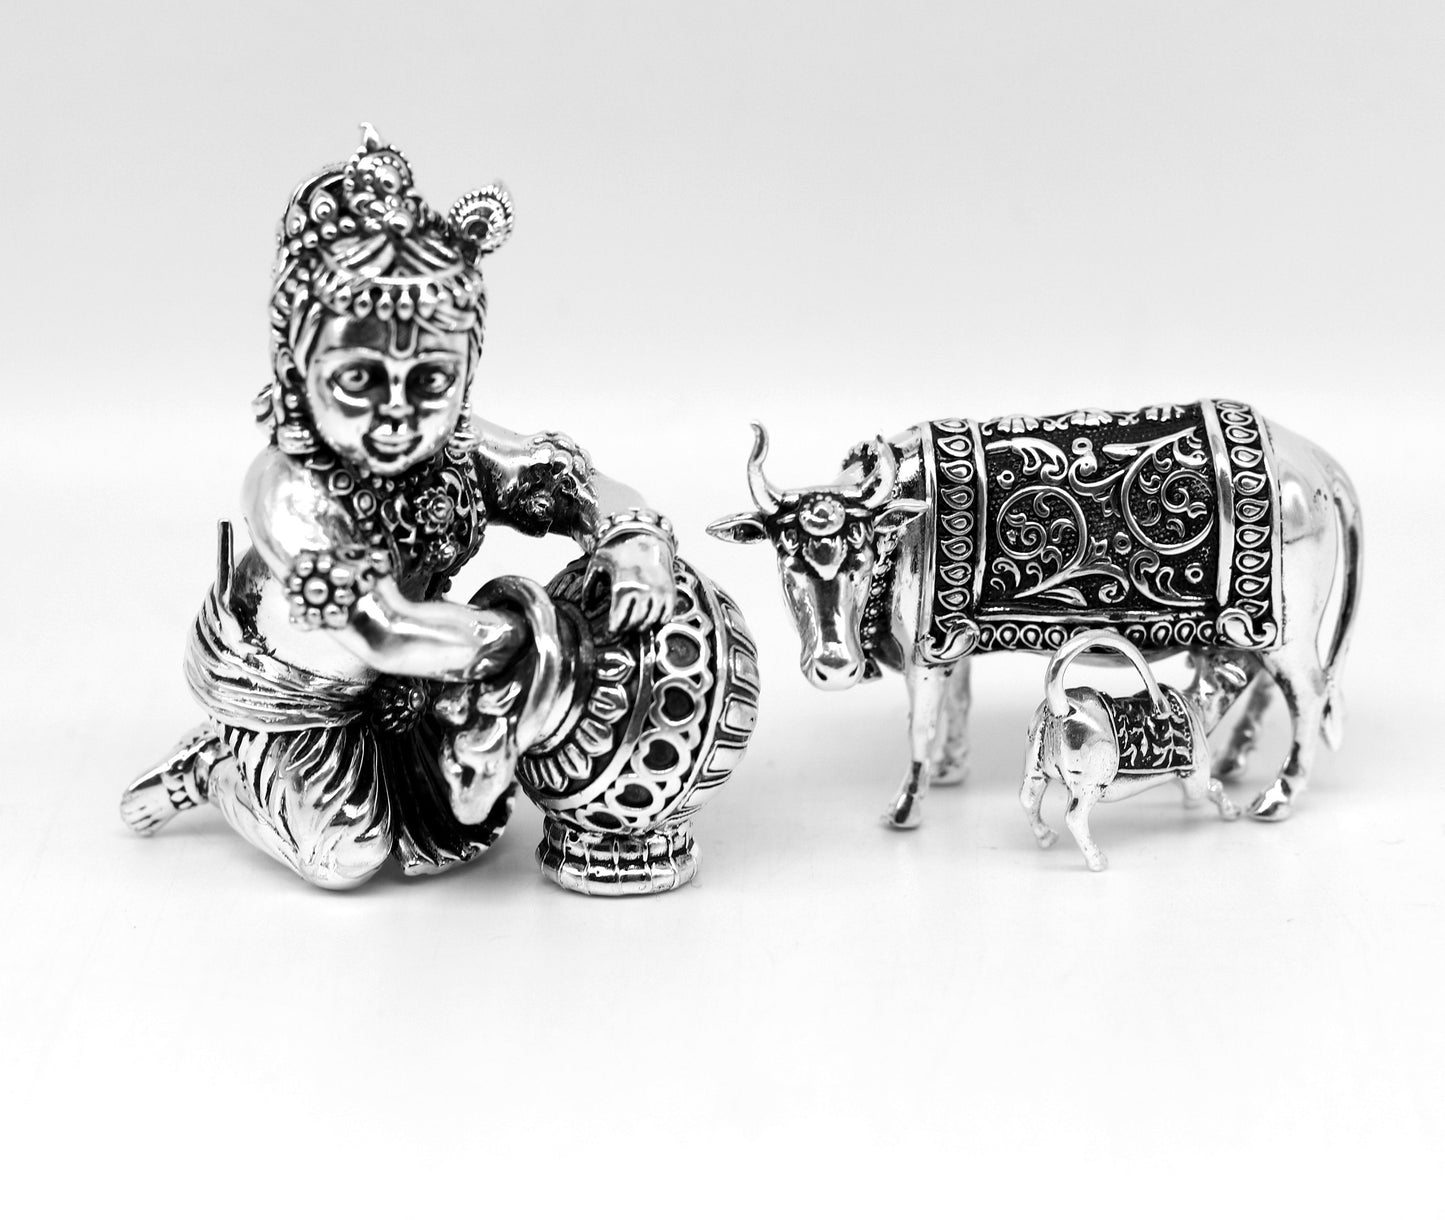 925 Sterling silver handmade Idol Krishna Bal Gopal statue figurine, Makkhan Gopal sculpture with Kamdhenu cow, silver puja article su229 - TRIBAL ORNAMENTS